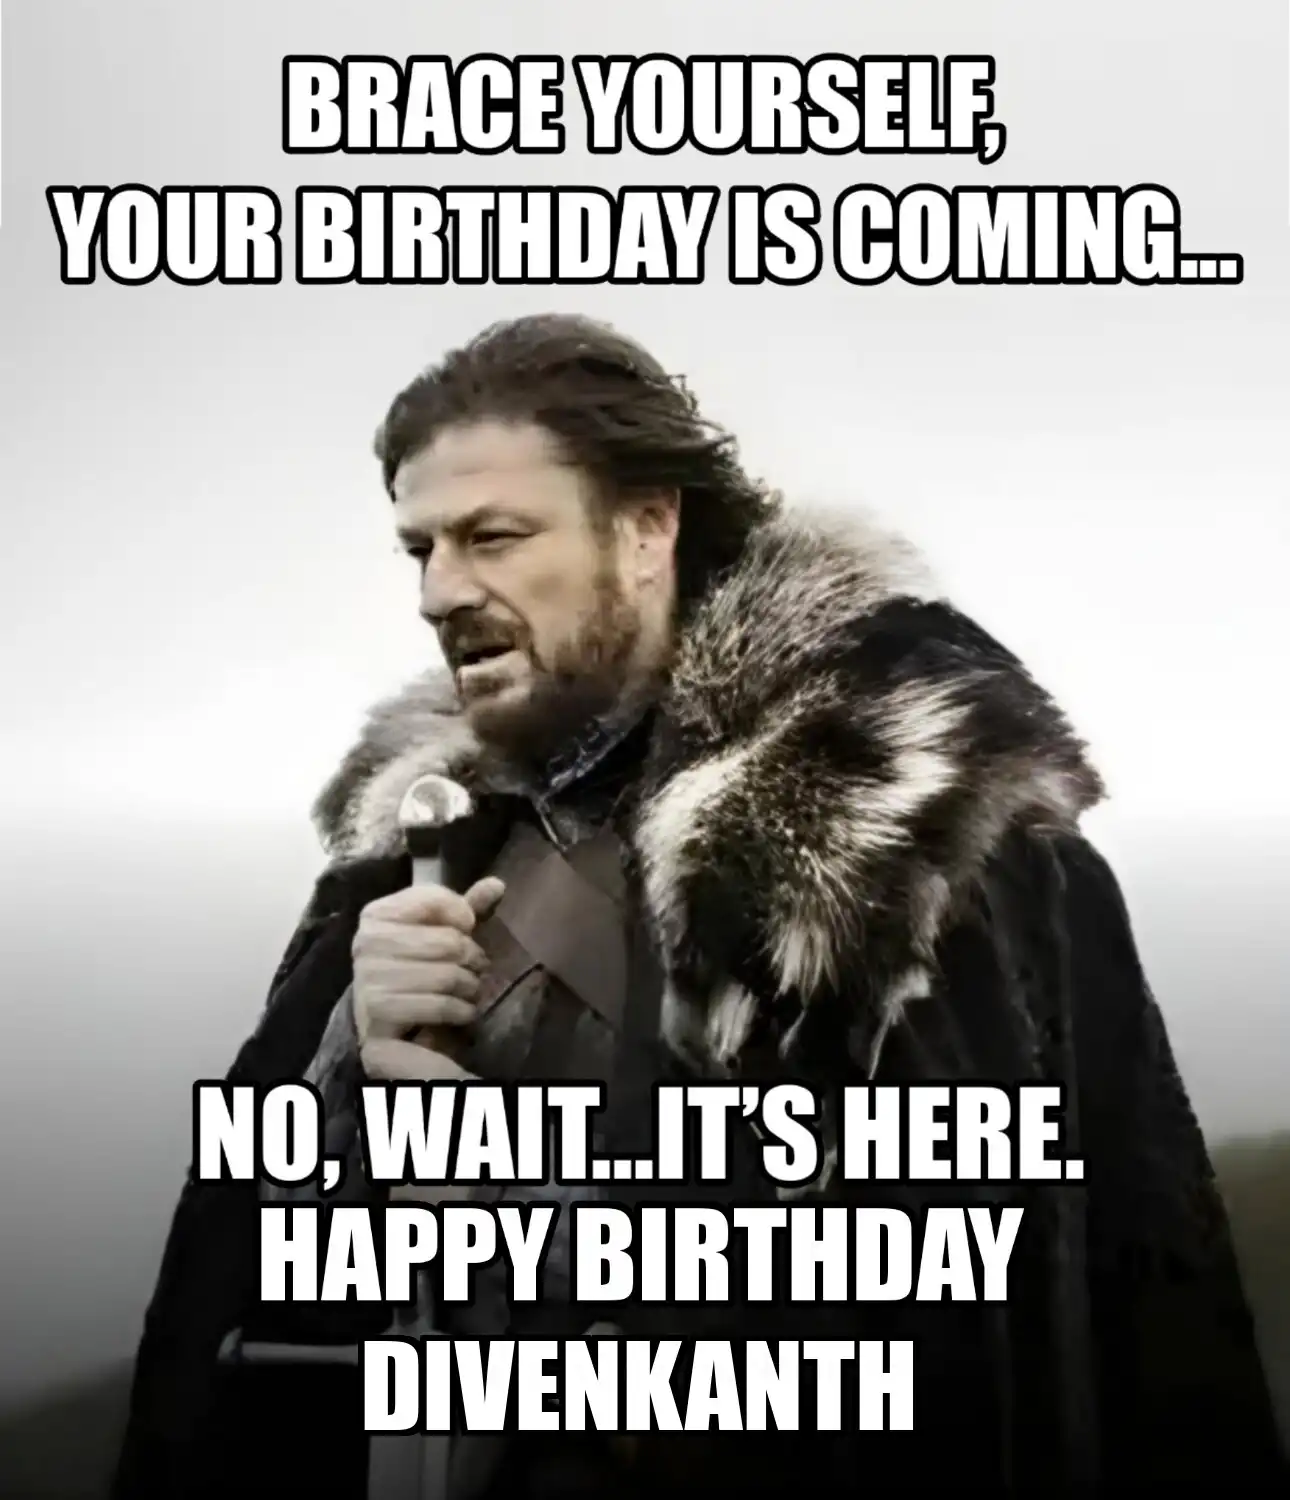 Happy Birthday Divenkanth Brace Yourself Your Birthday Is Coming Meme